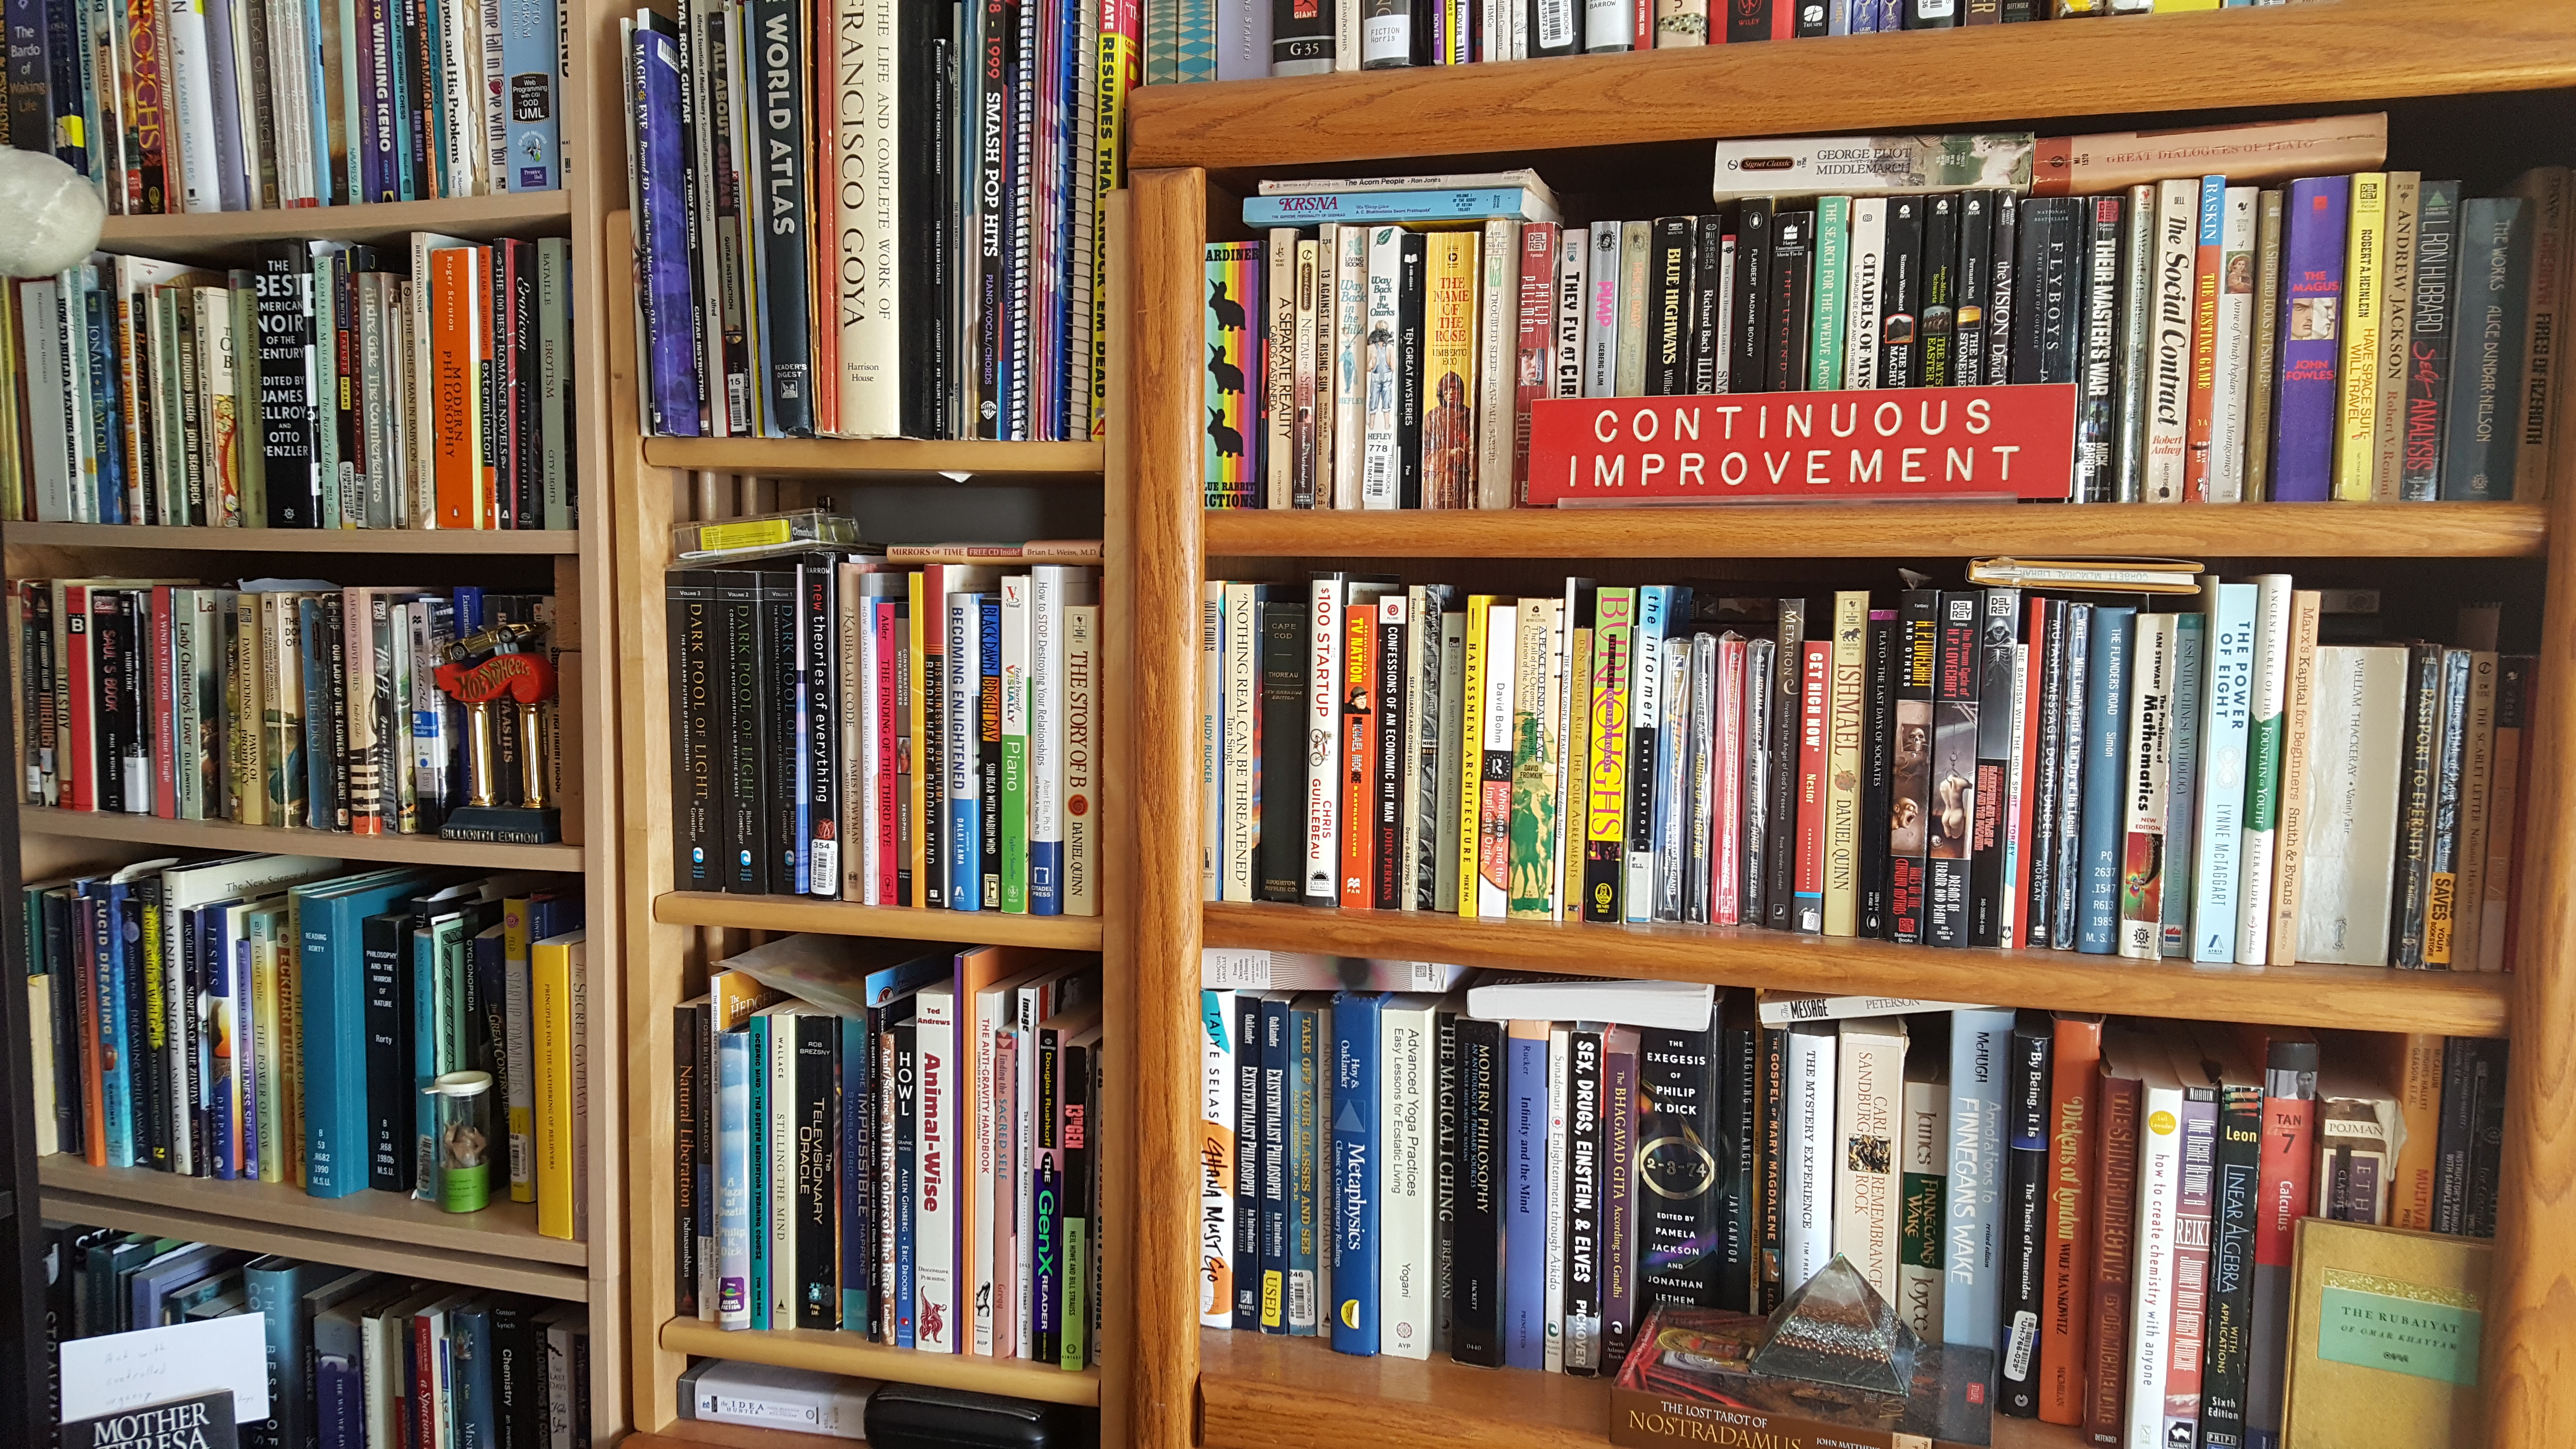 Take a look at my bookshelf...